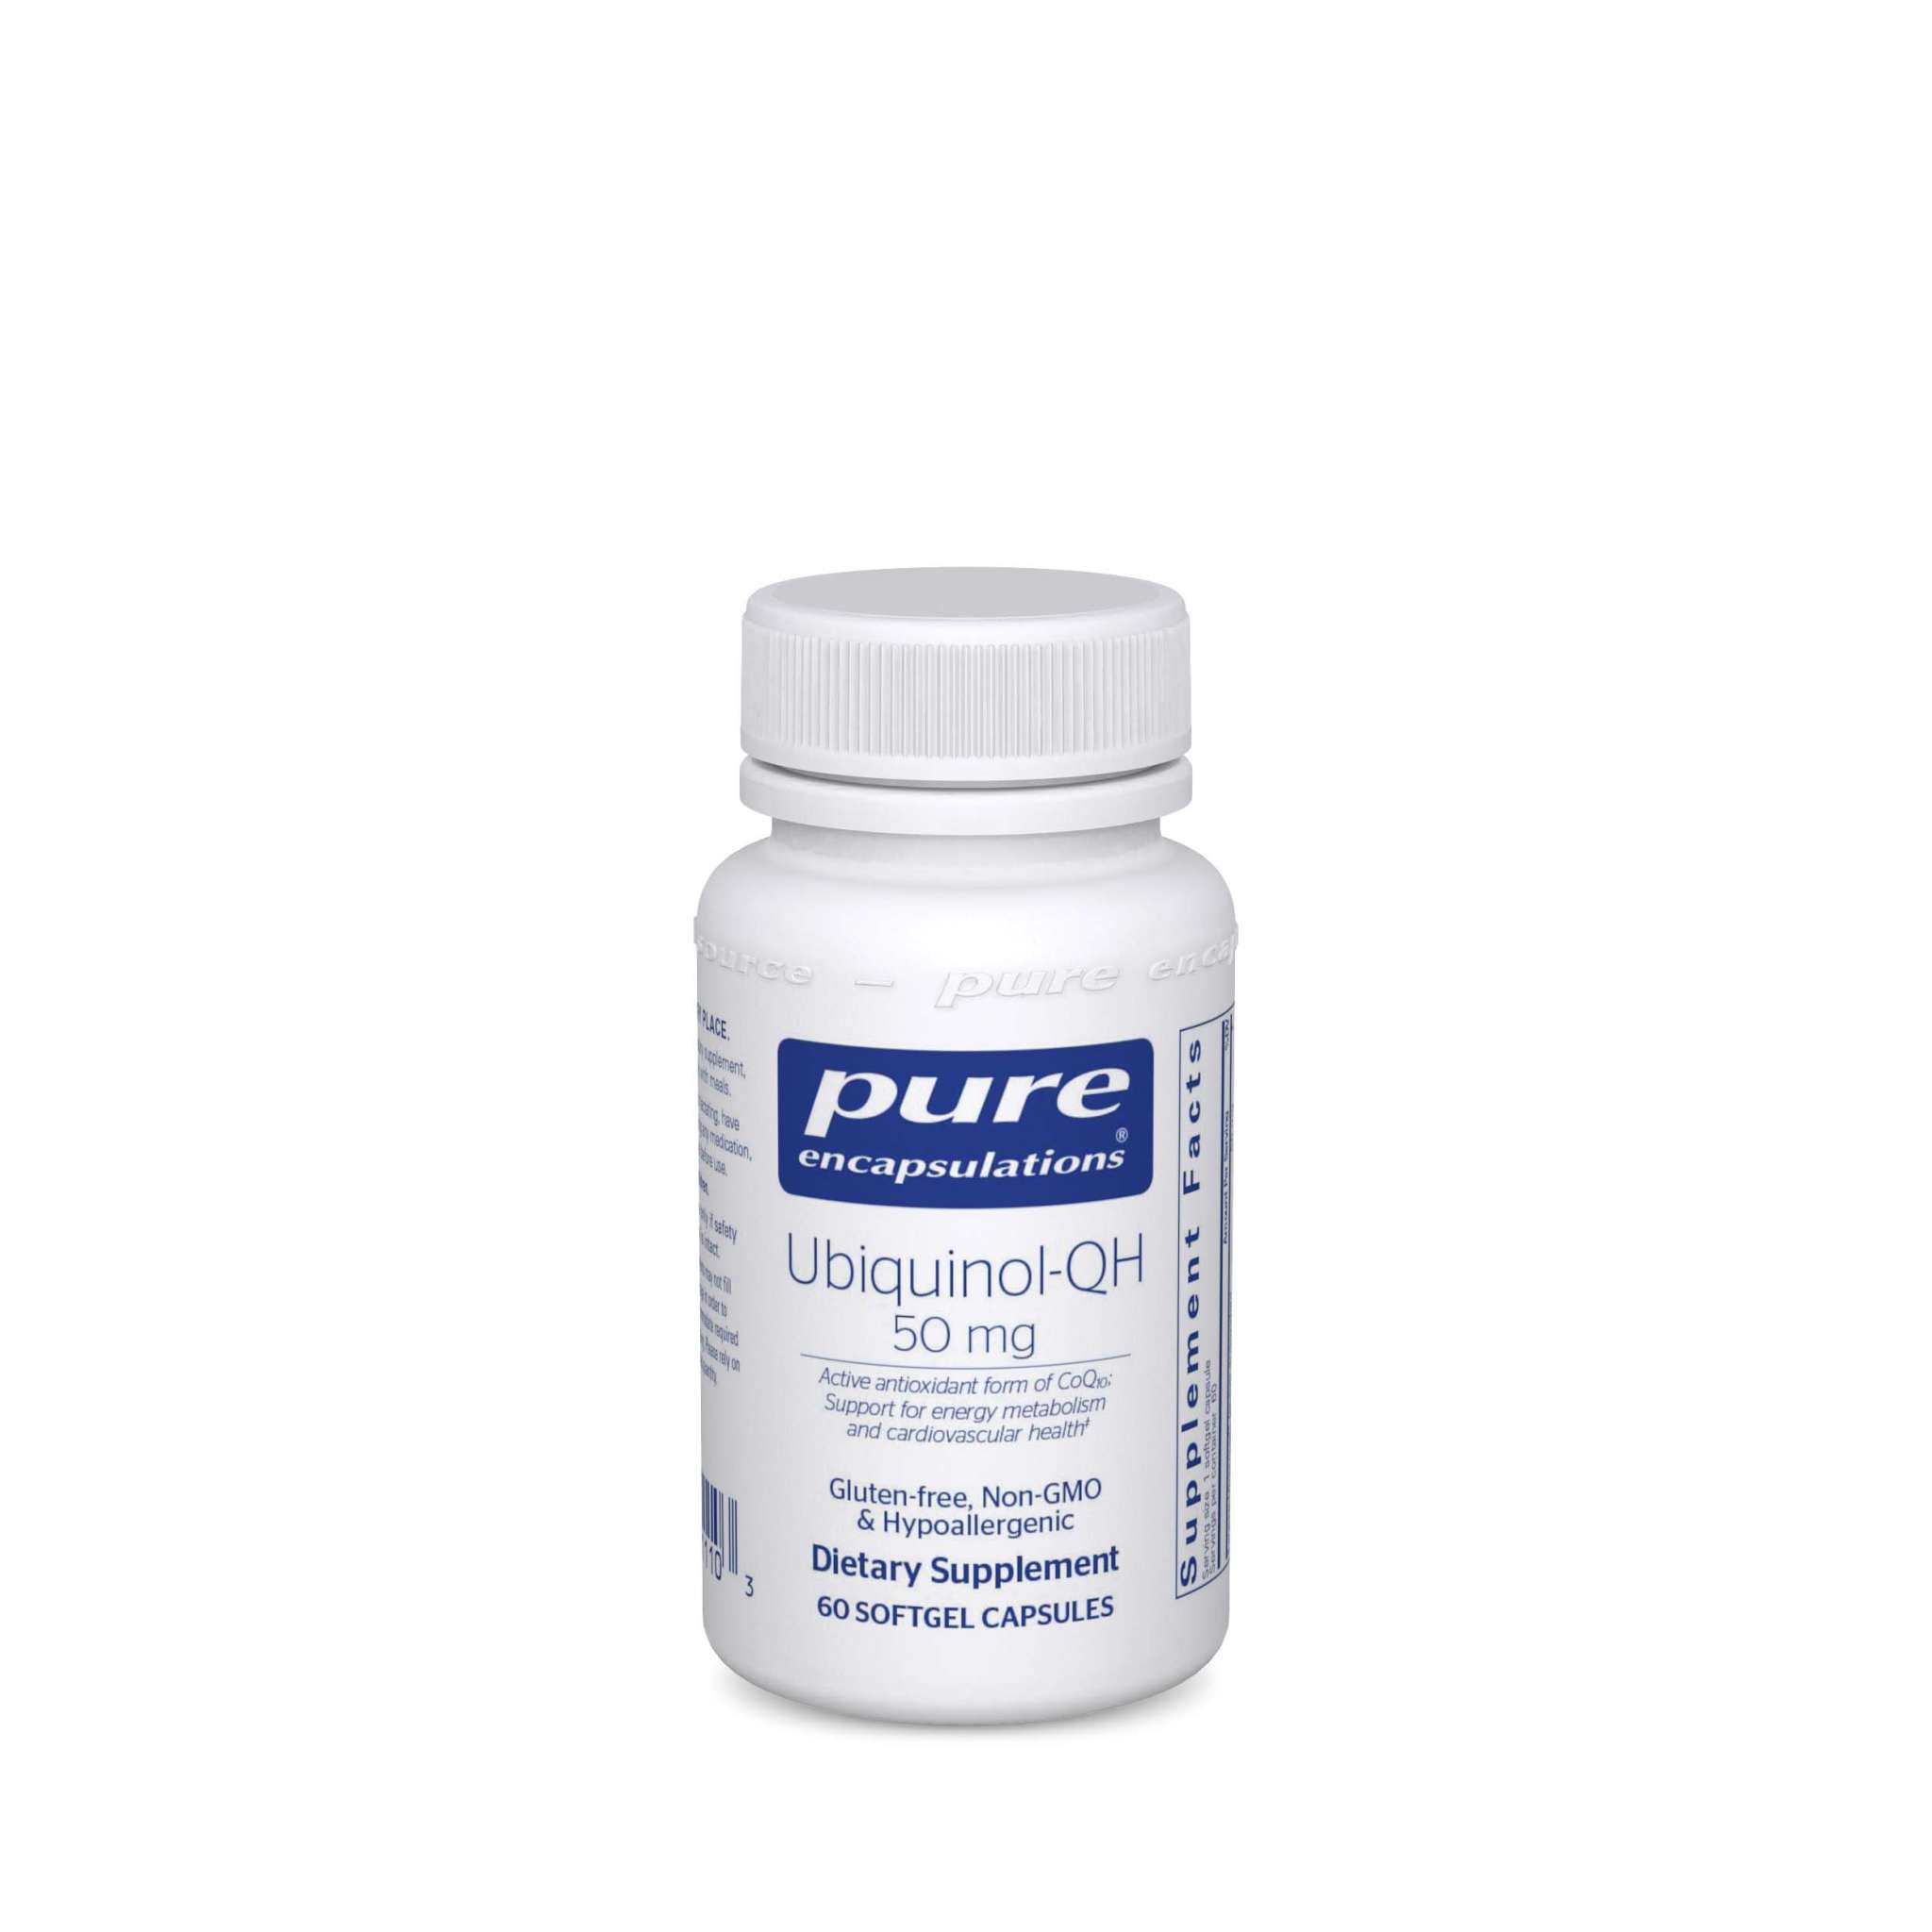 Pure Encapsulations - Ubiquinol Qh 50 mg Coq10